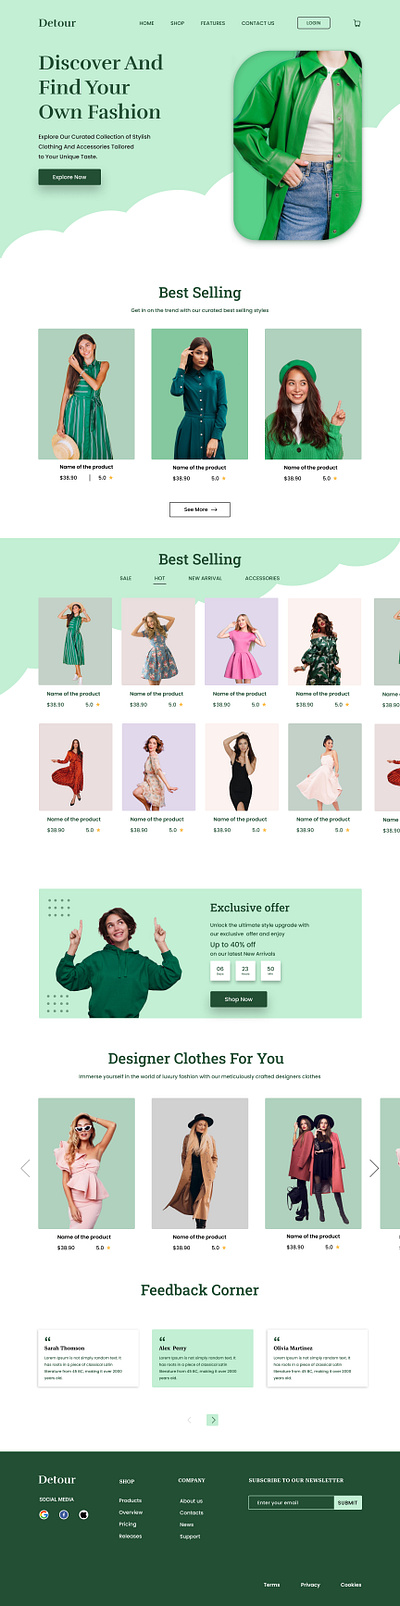 Detour - A female clothing brand Landing Page clothing design landing page ui ux